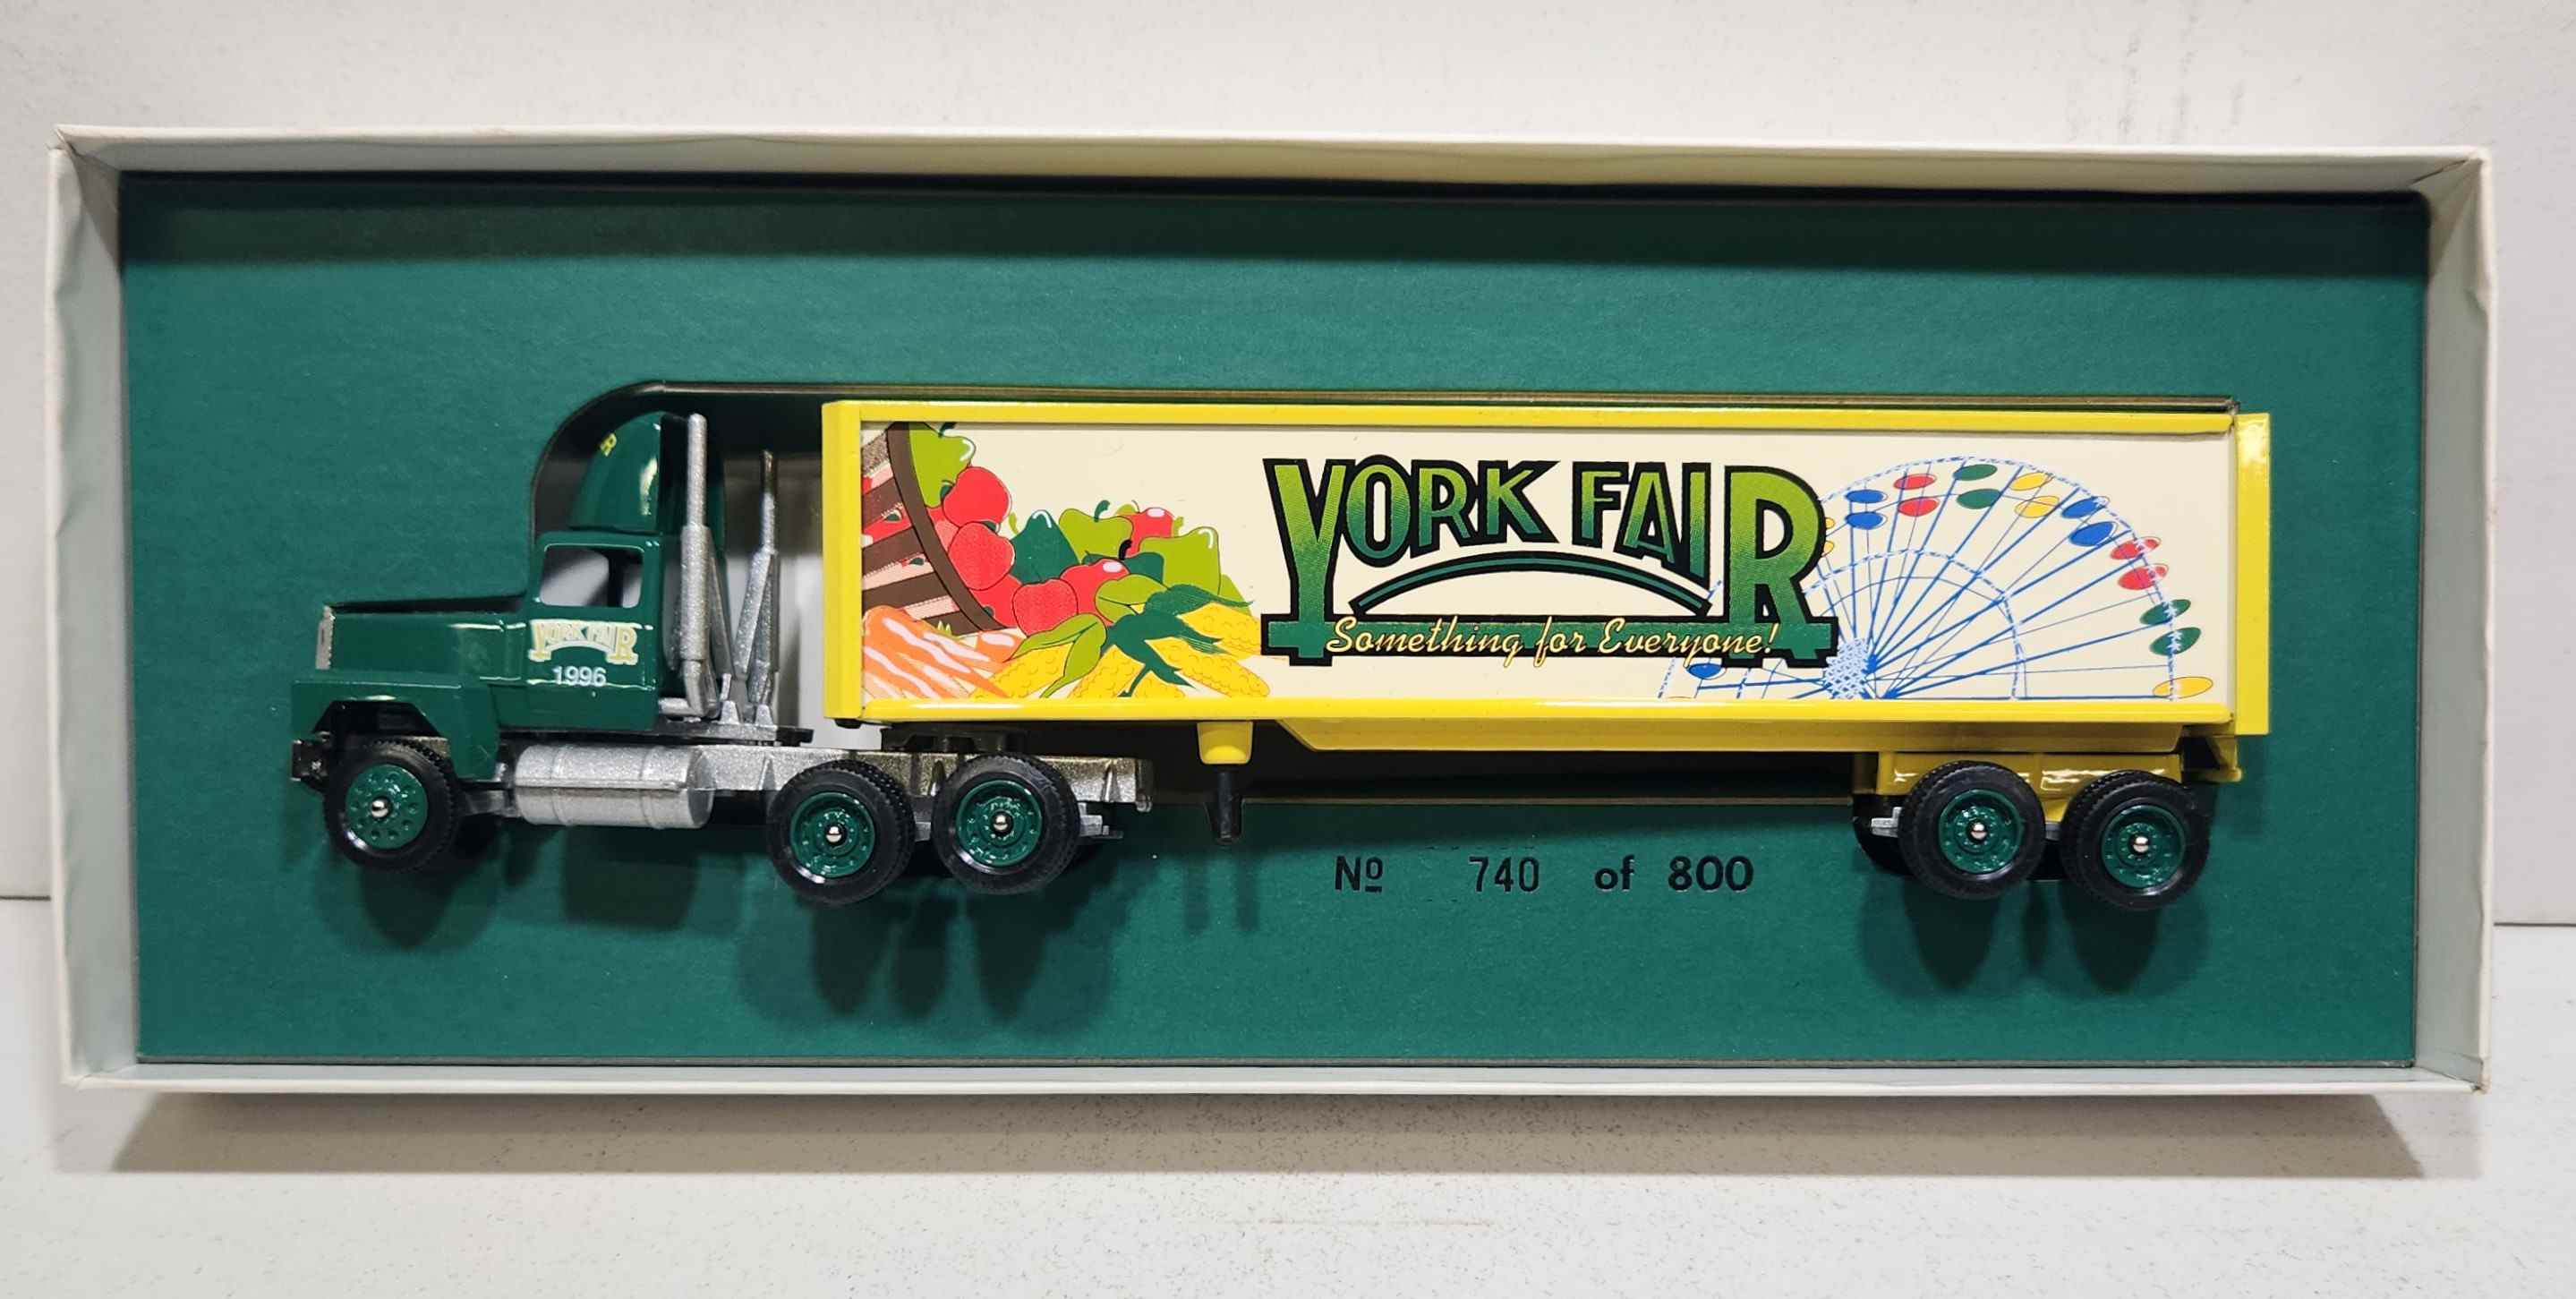 1996 York Fair 1/64th Something for Everyone Transporter